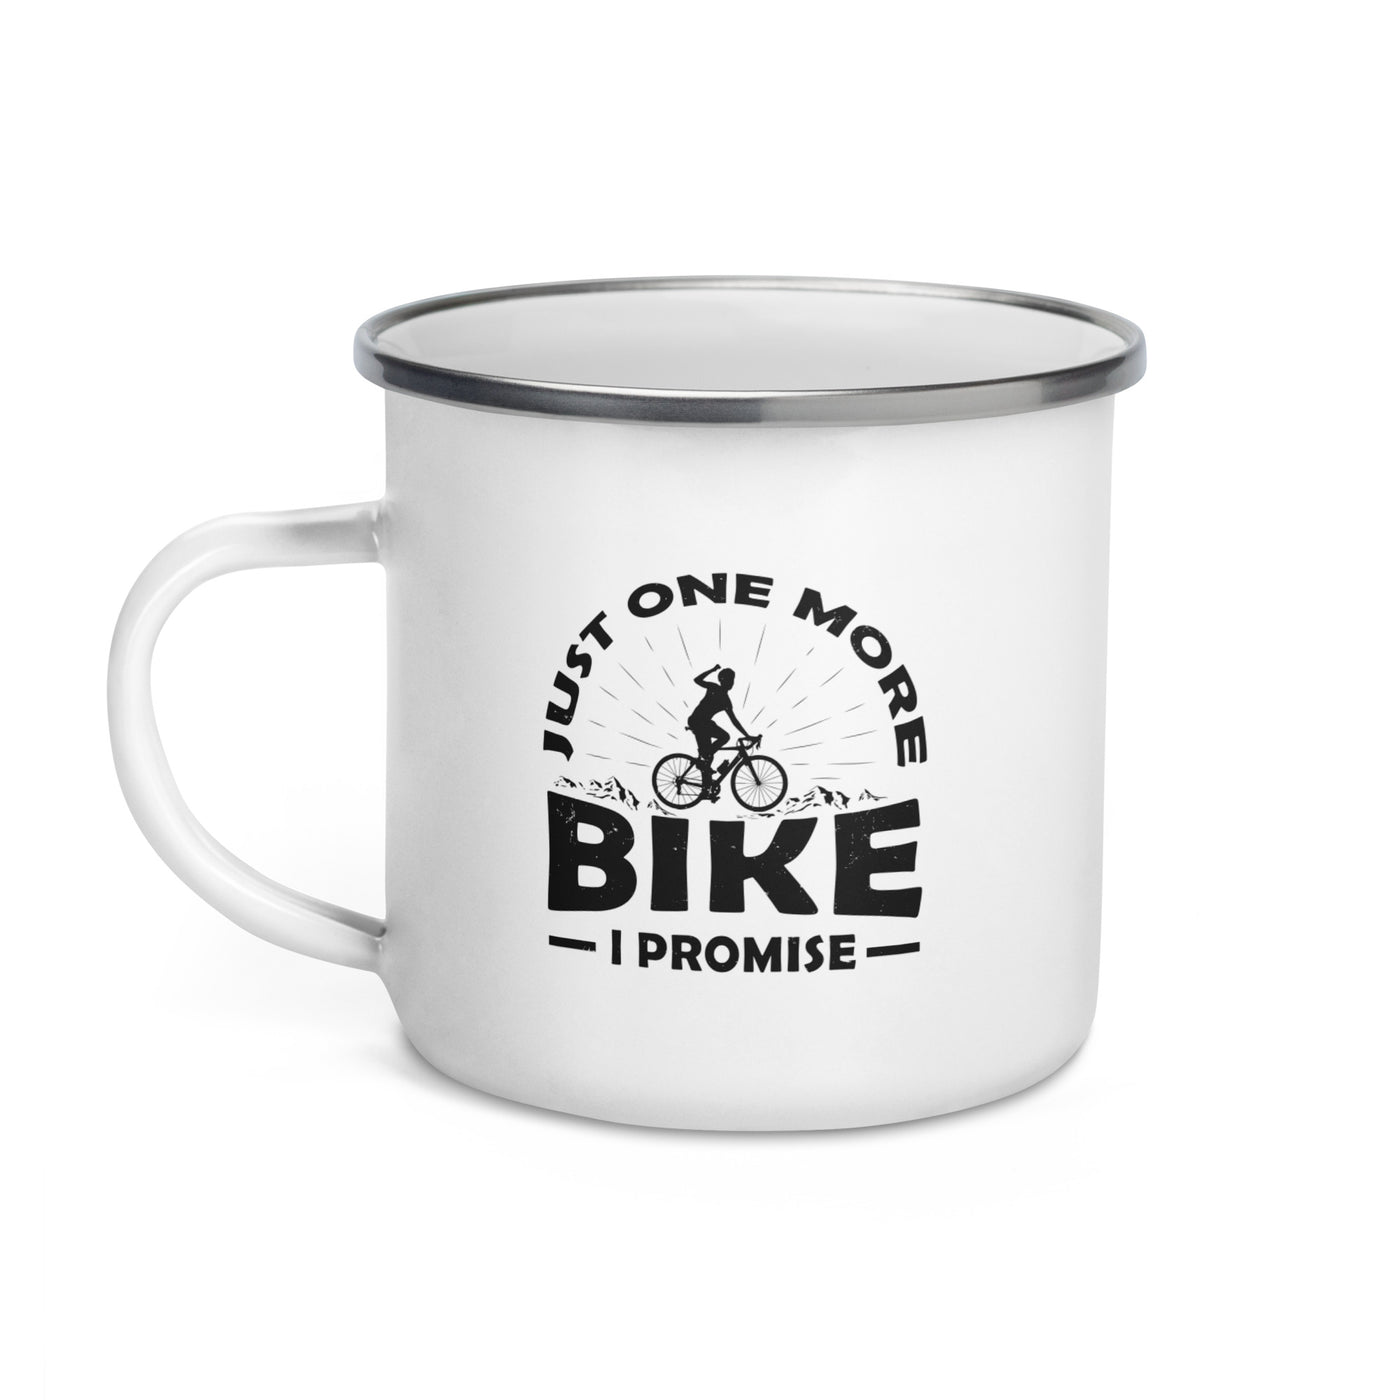 Just One More Bike, I Promise - Emaille Tasse fahrrad